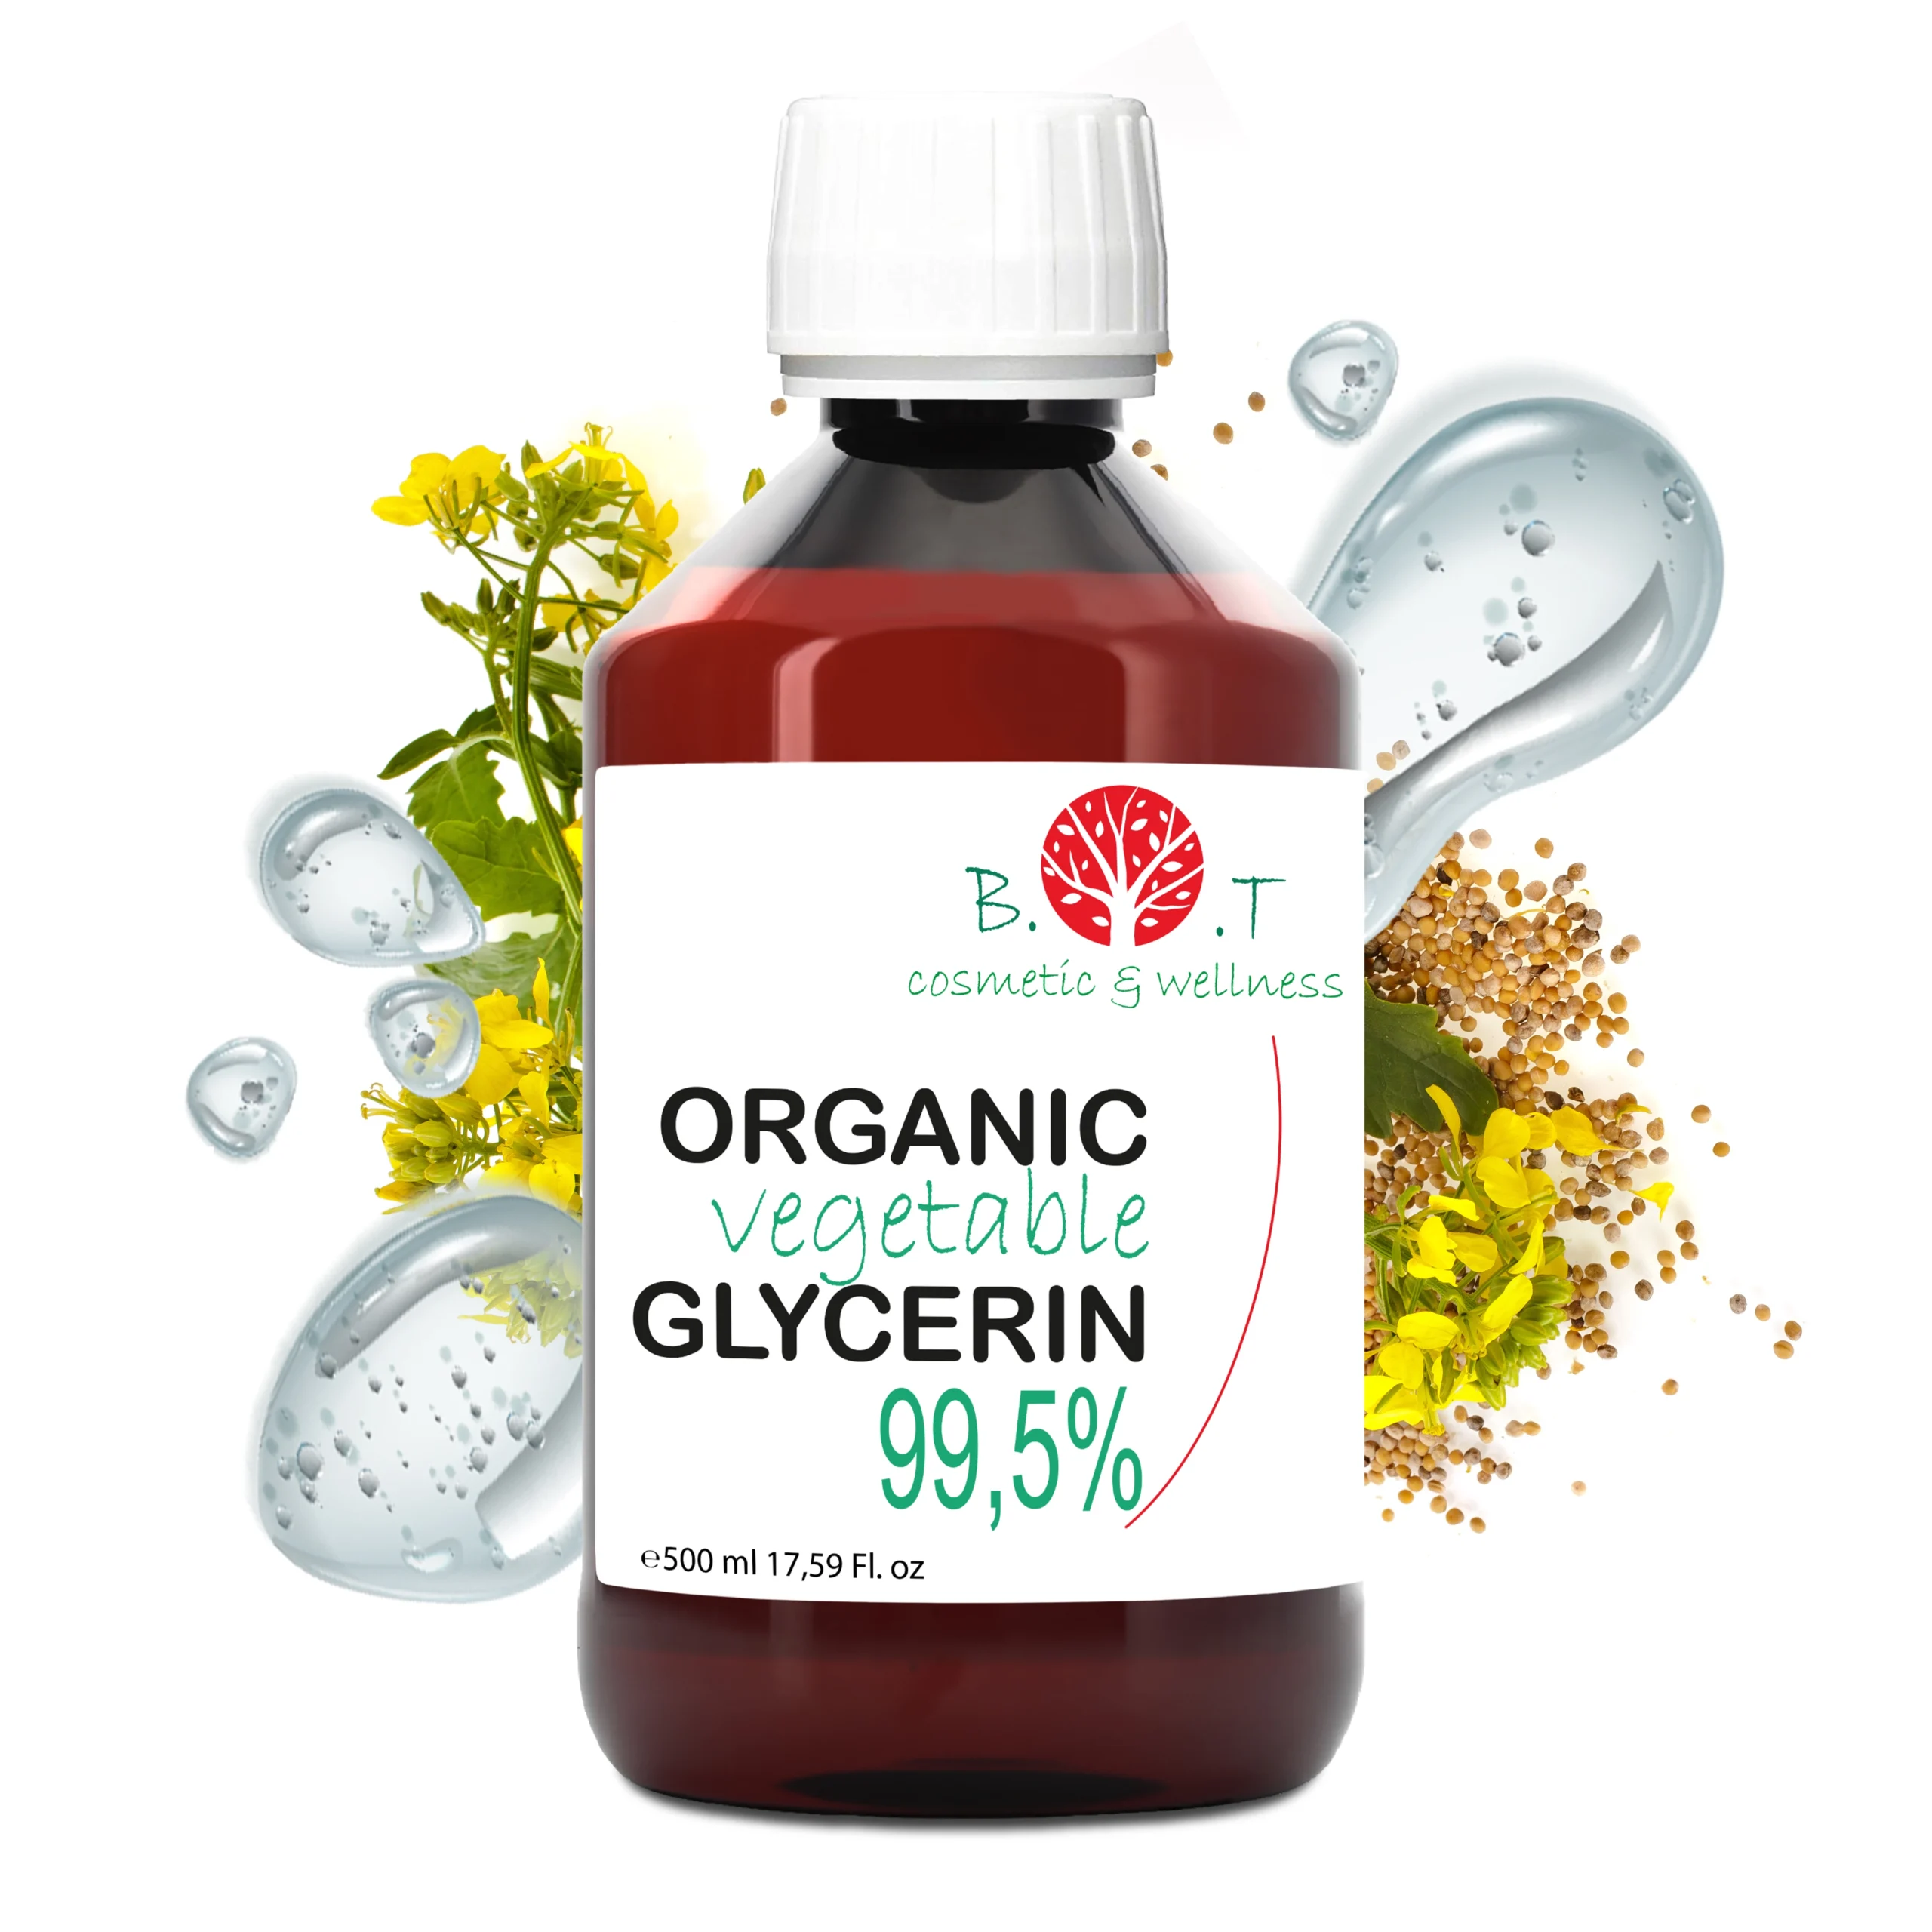 GLICERINA - Glicerol 99,5% 250ml